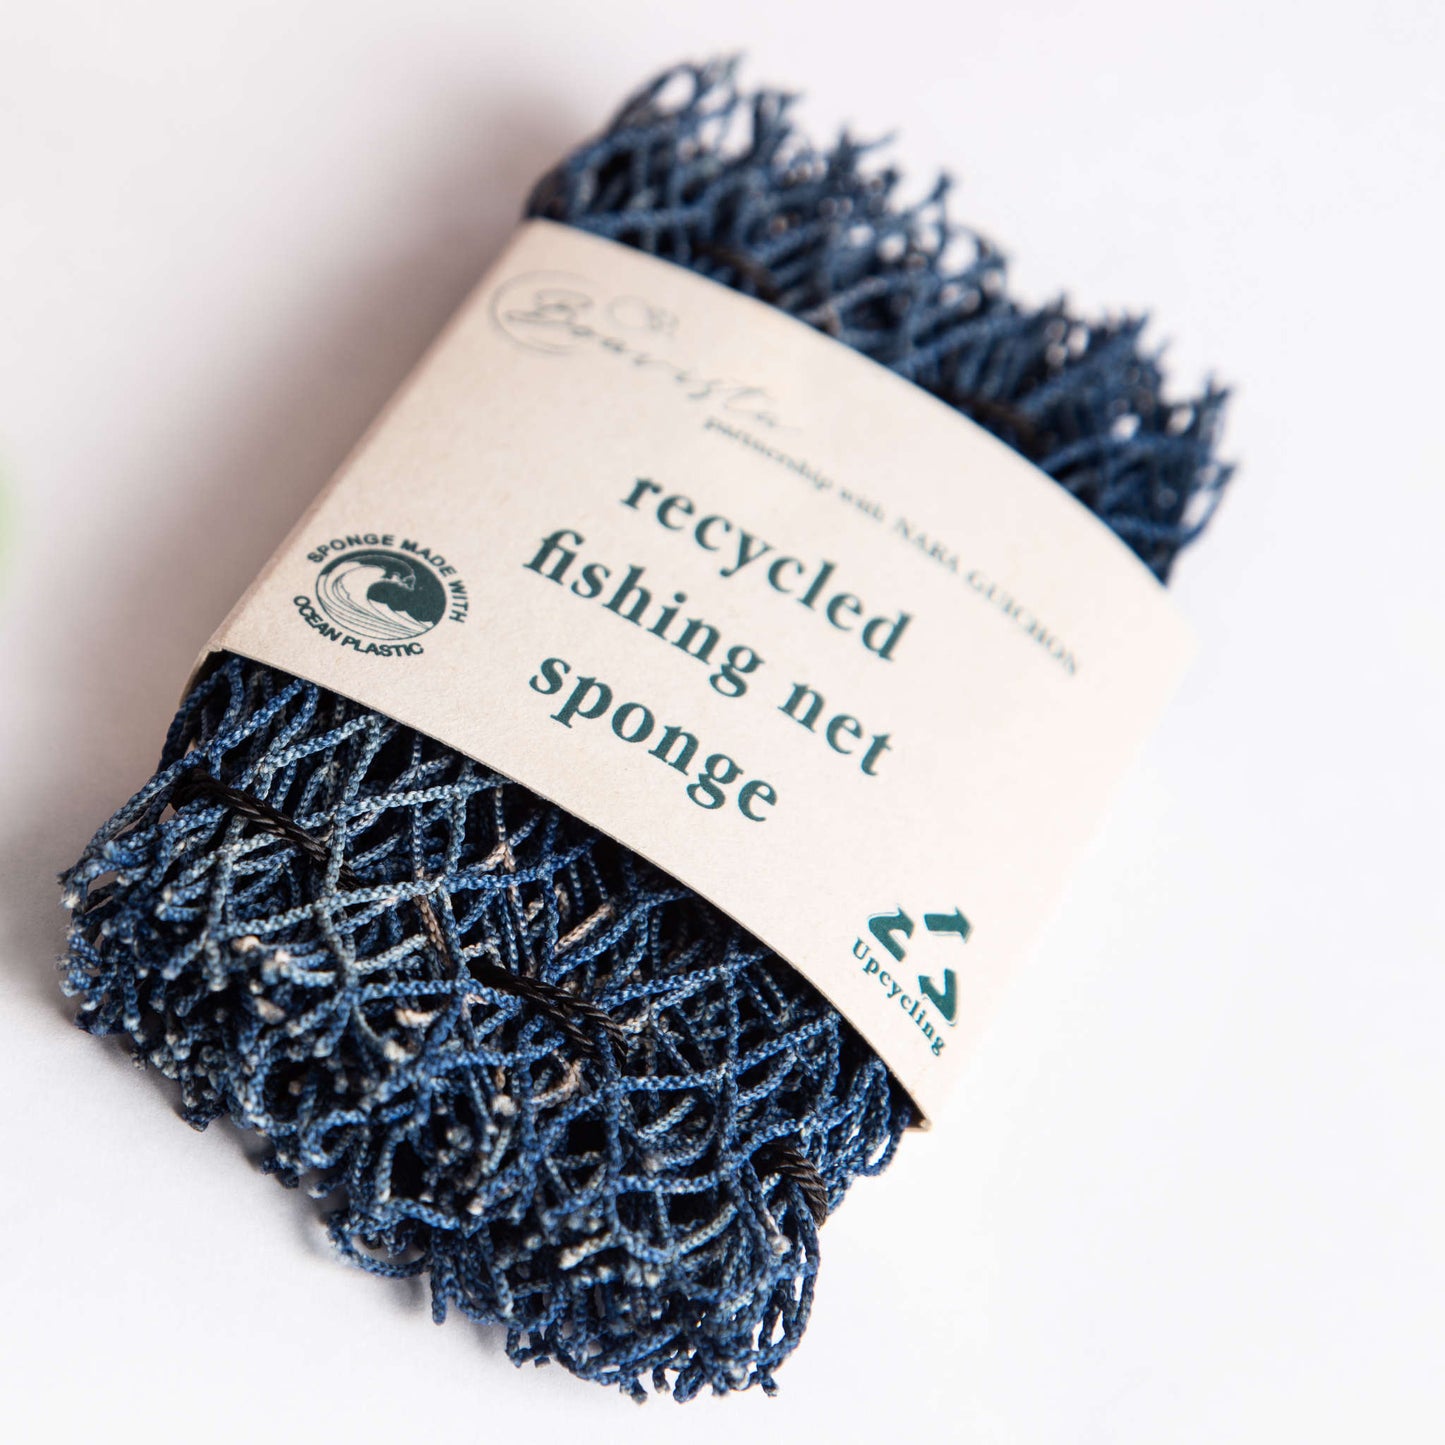 Washing-up sponge made of recycled fishing net